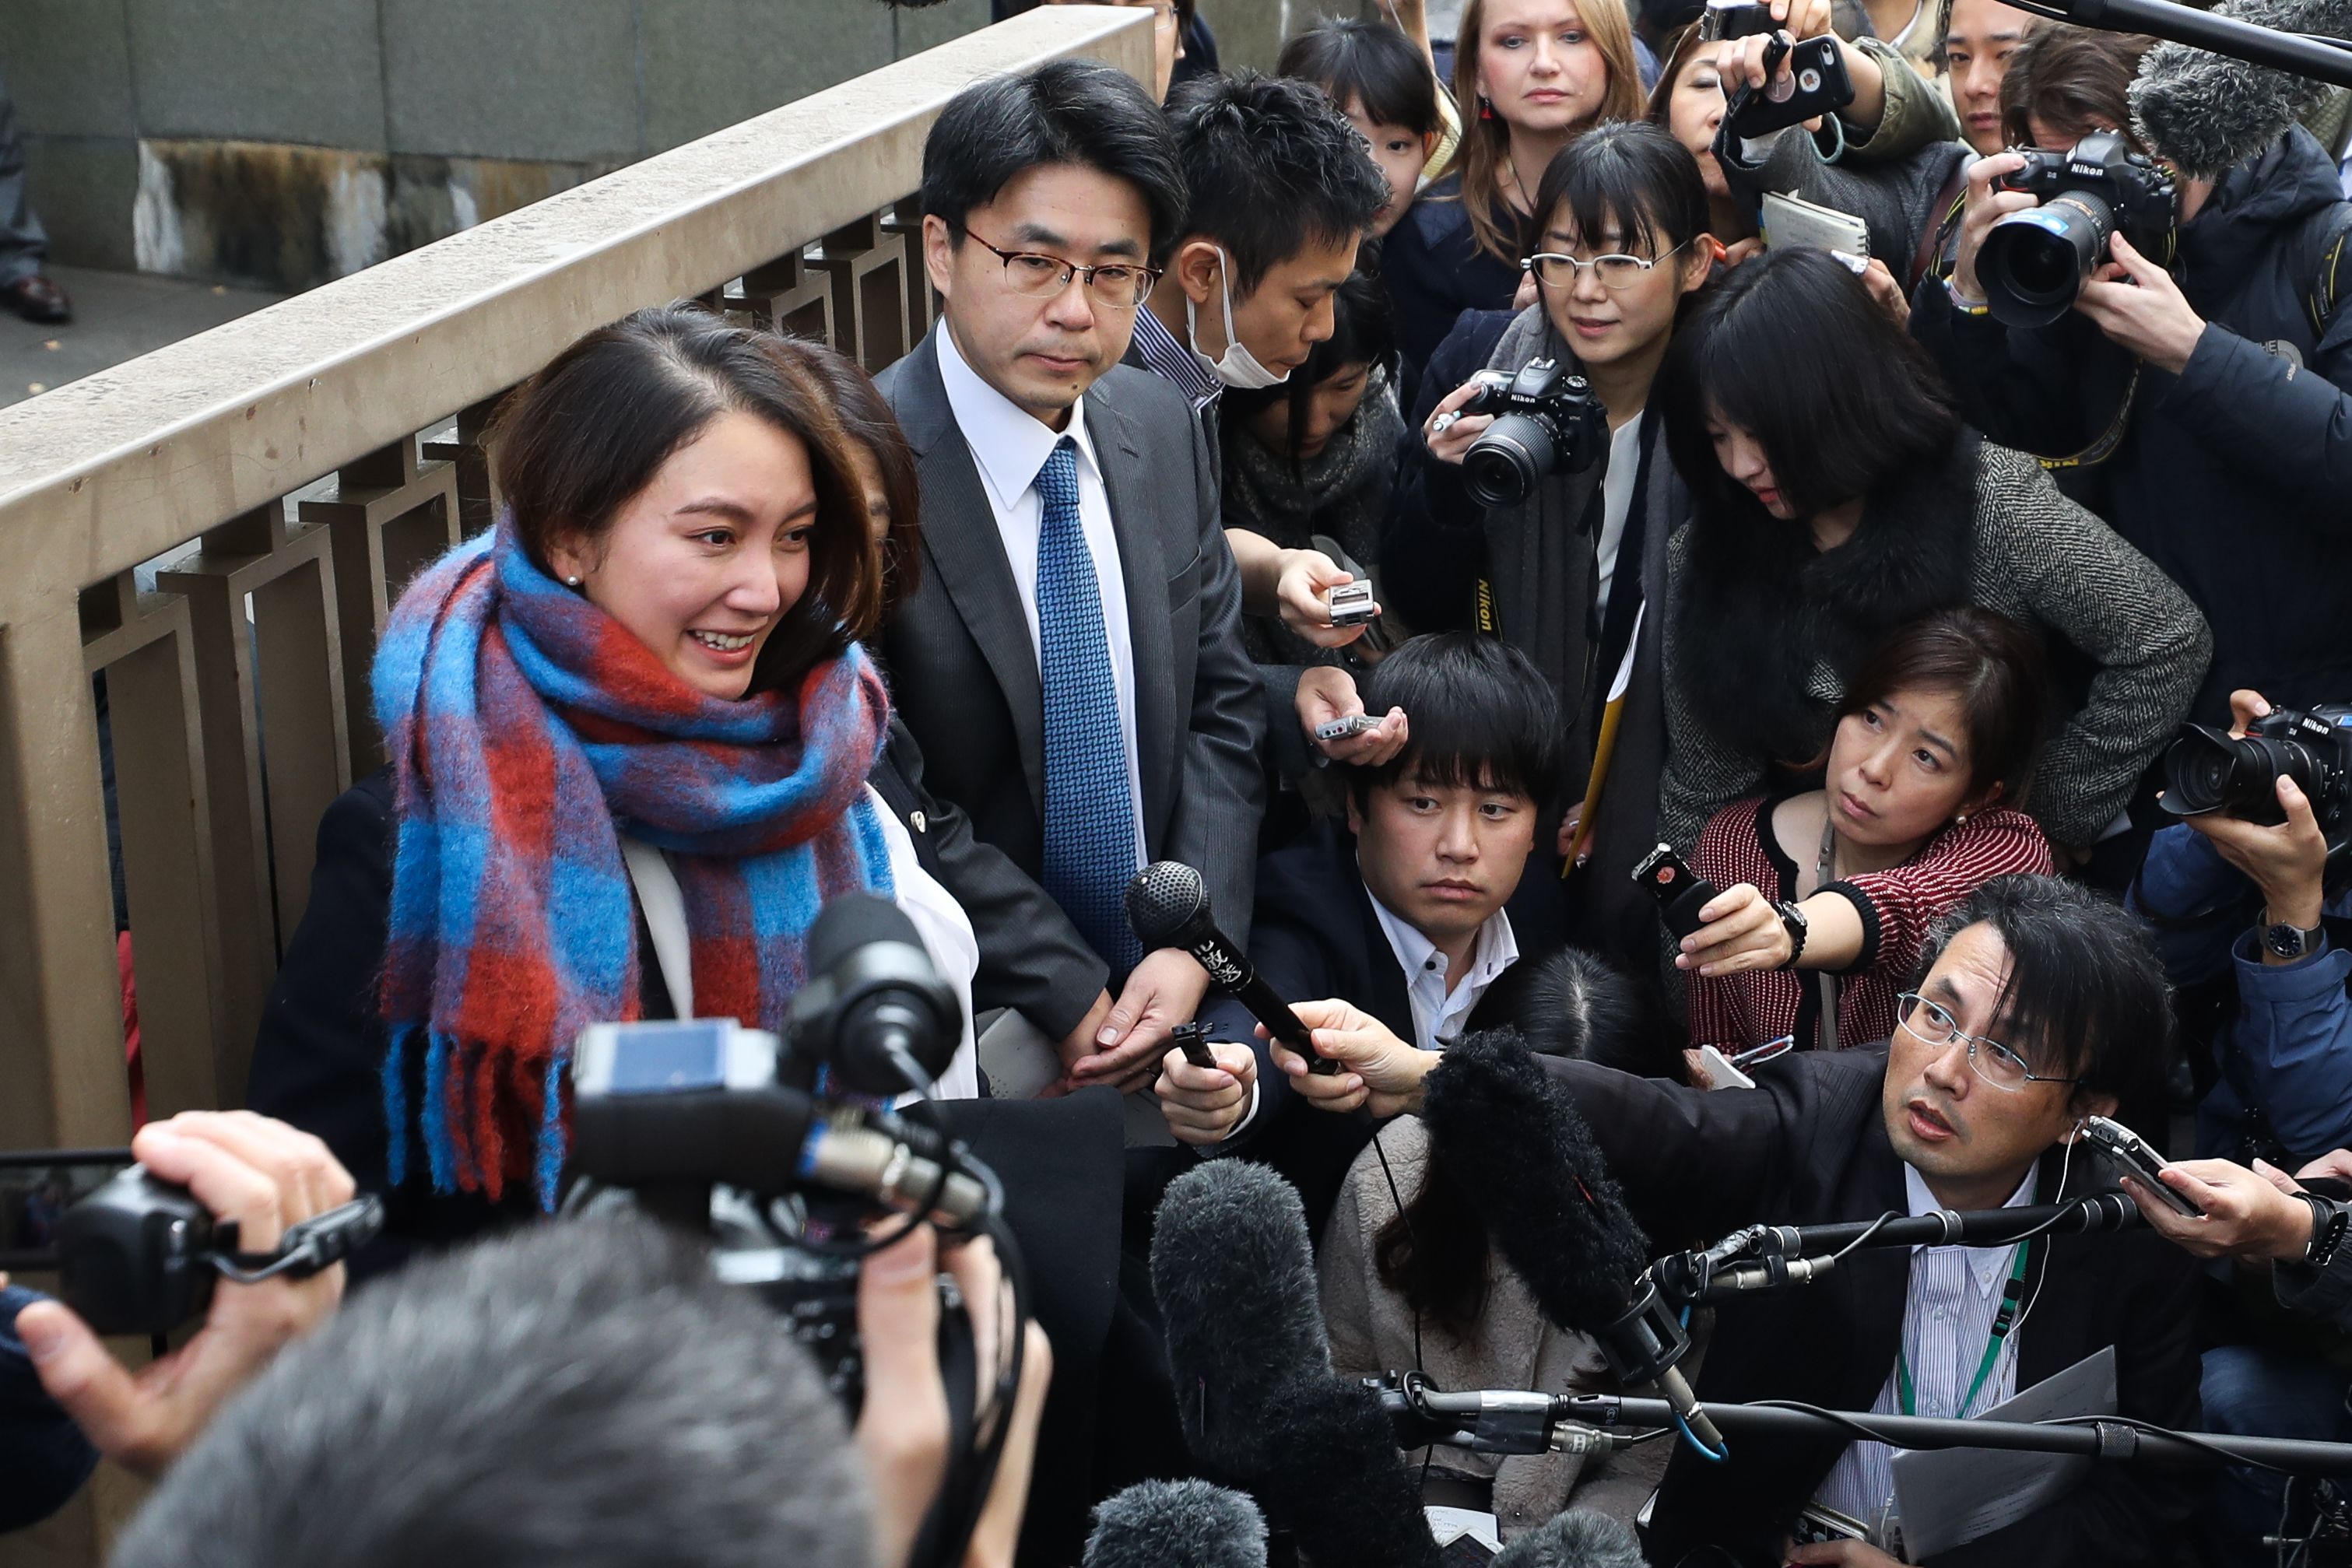 Rape Wali Sexy Porn Videos - Shiori Ito won civil case against her alleged rapist. But Japan's rape laws  need overhaul, campaigners say | CNN